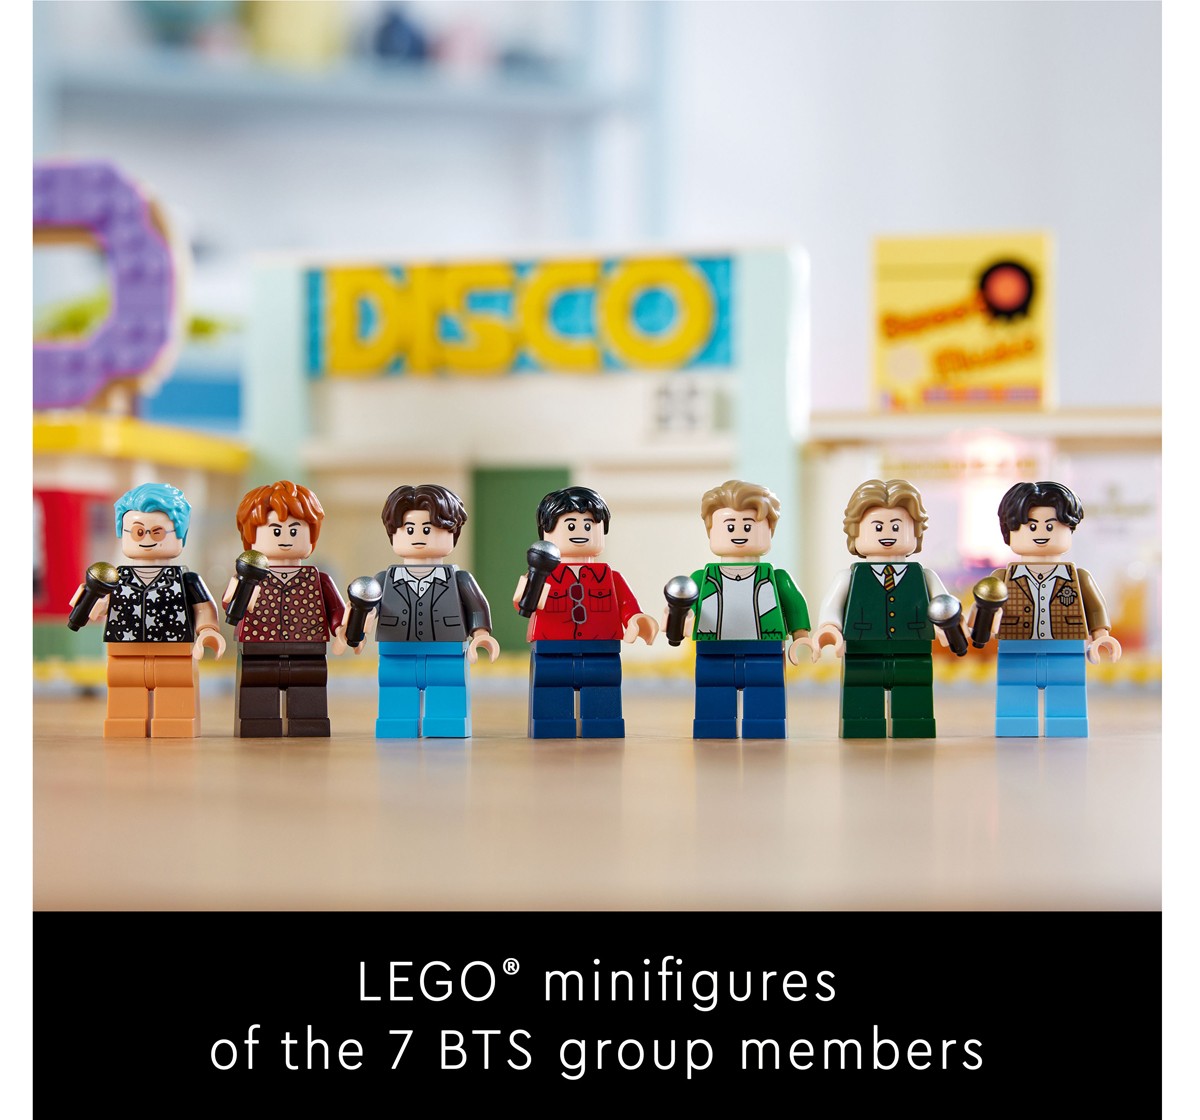 LEGO Ideas BTS Dynamite 21339 Building Kit (749 Pieces), 18Y+